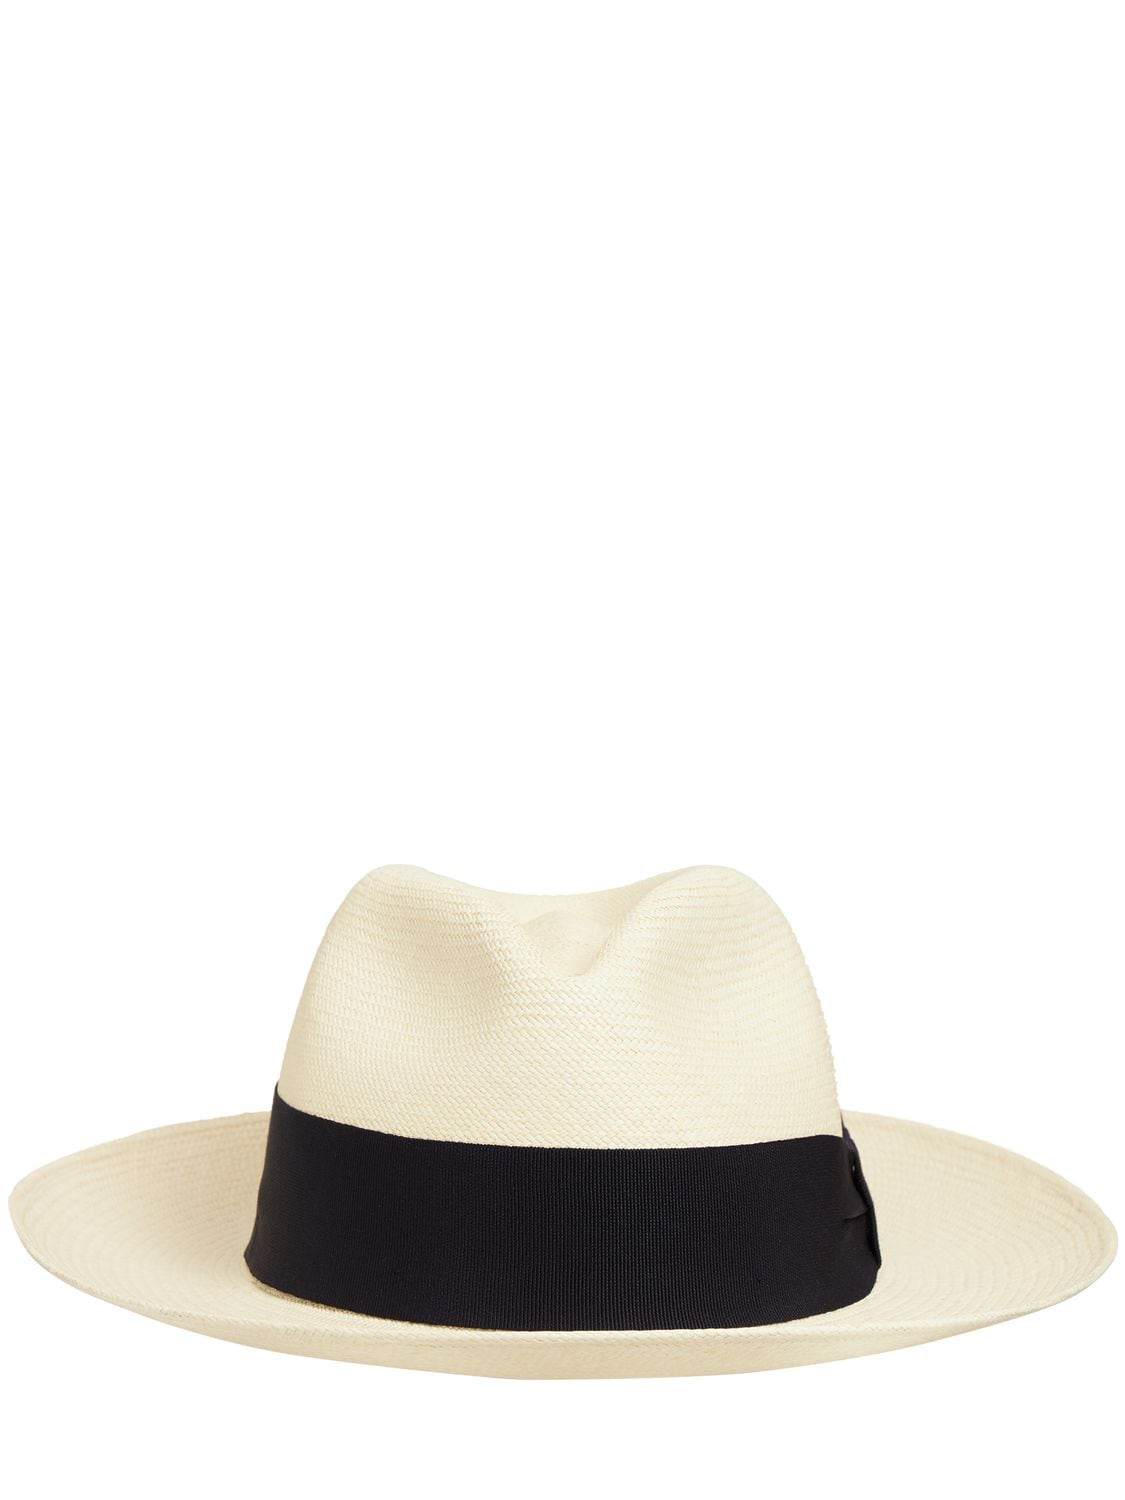 Frescobol Carioca Herringbone Panama Straw Hat In Navy Blue